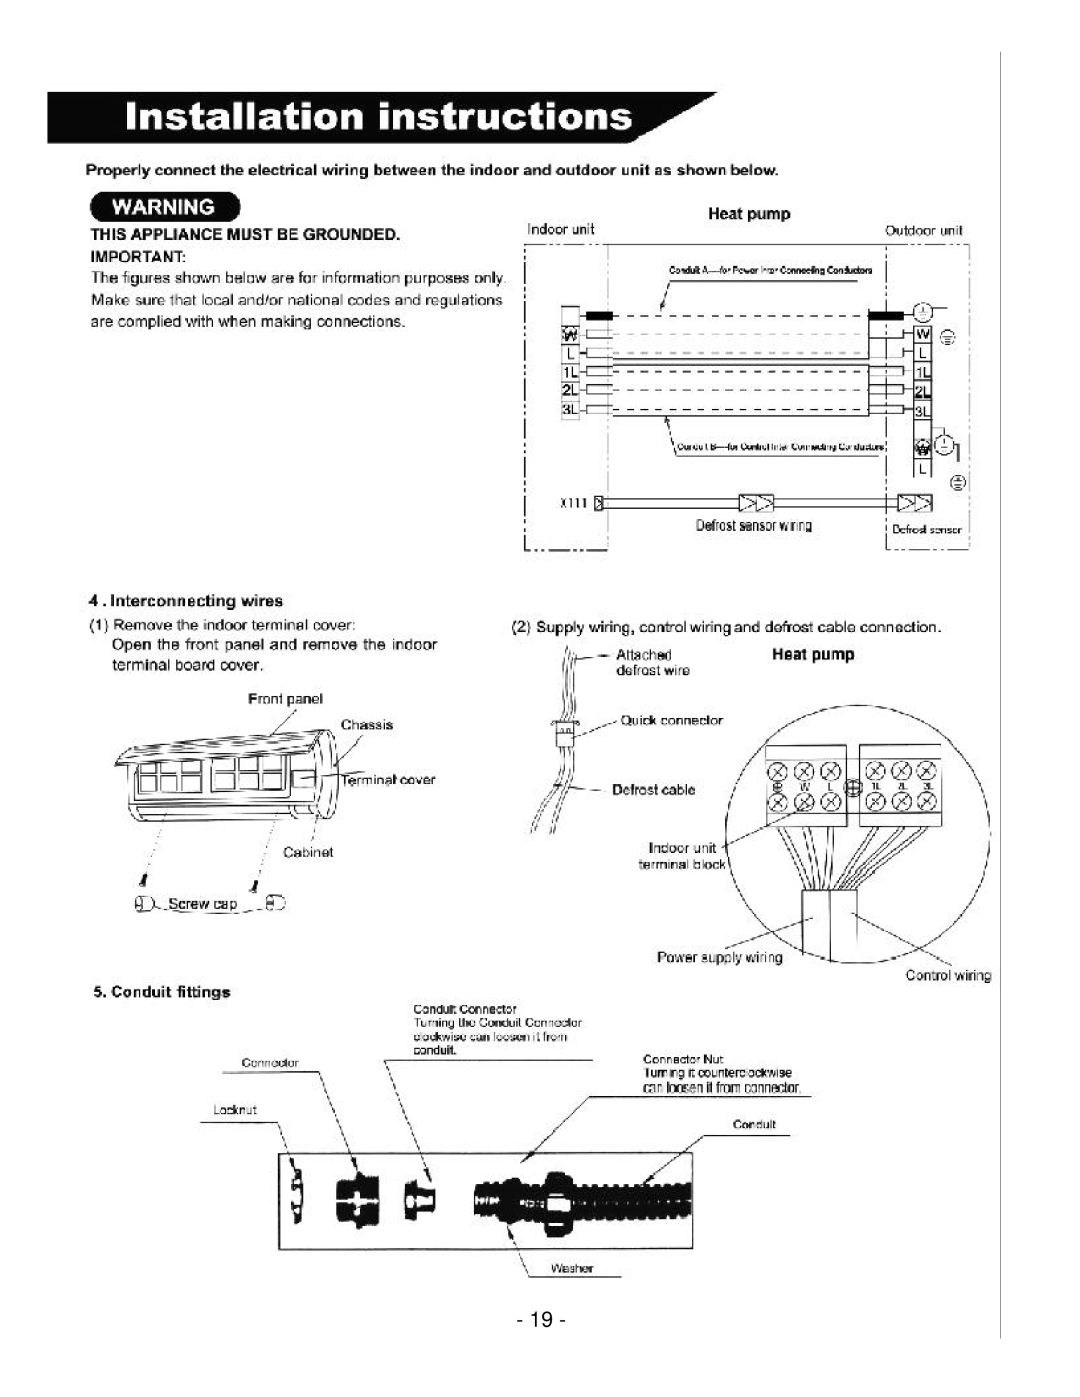 Soleus Air KFR/KFS Series manual 